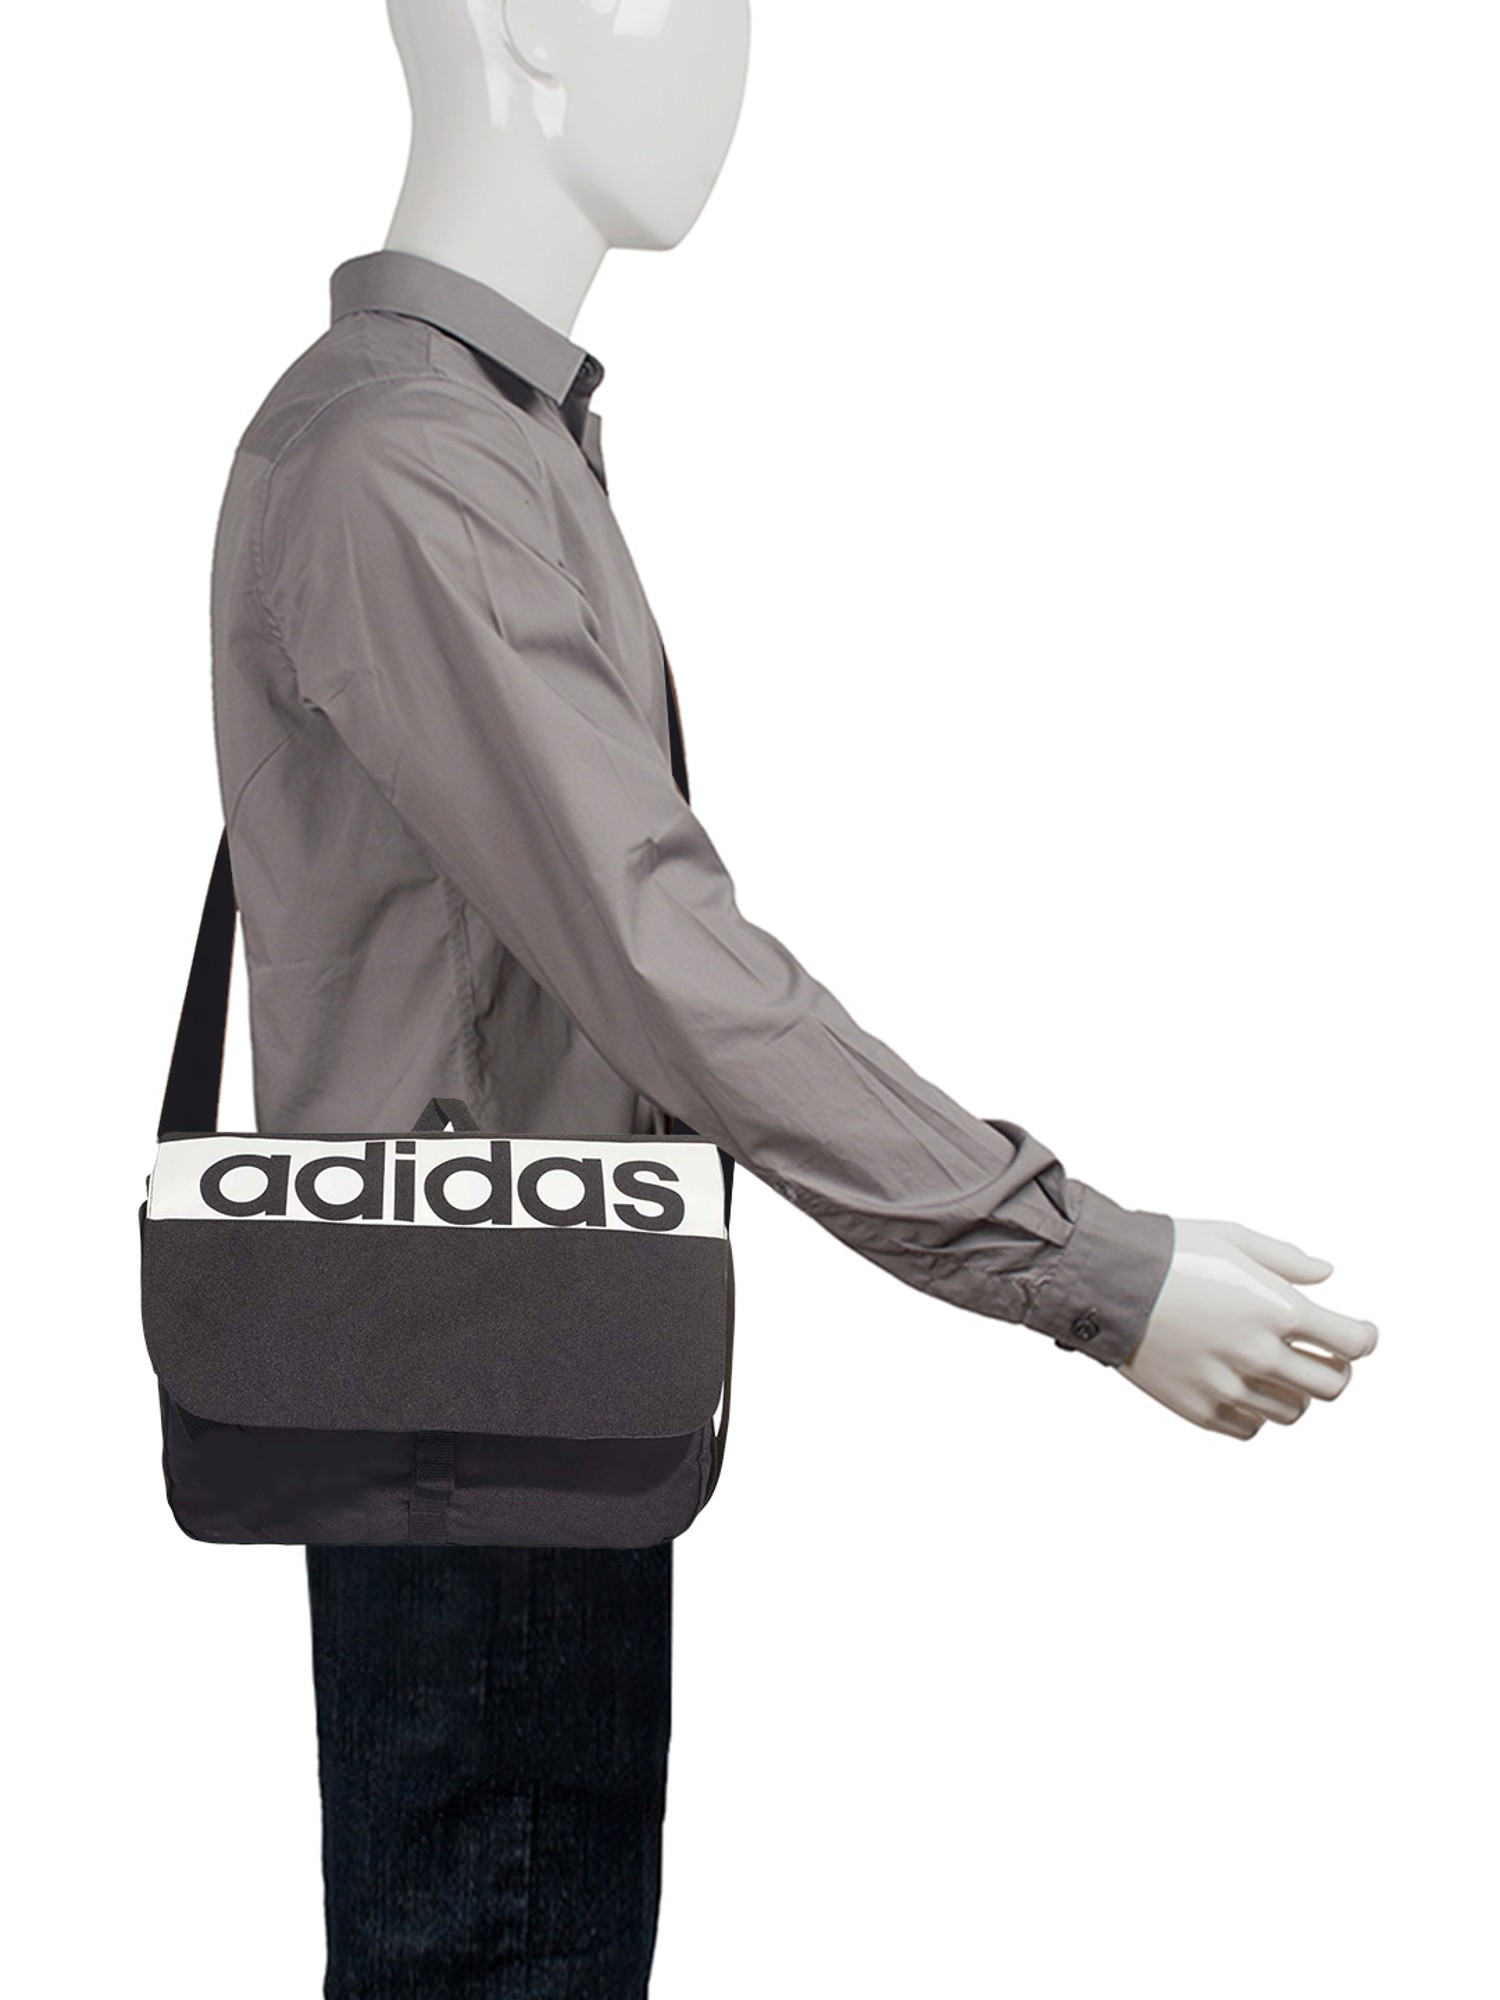 adidas Originals Unisex Festival Crossbody Bag, Black/White, ONE SIZE :  Amazon.in: Fashion